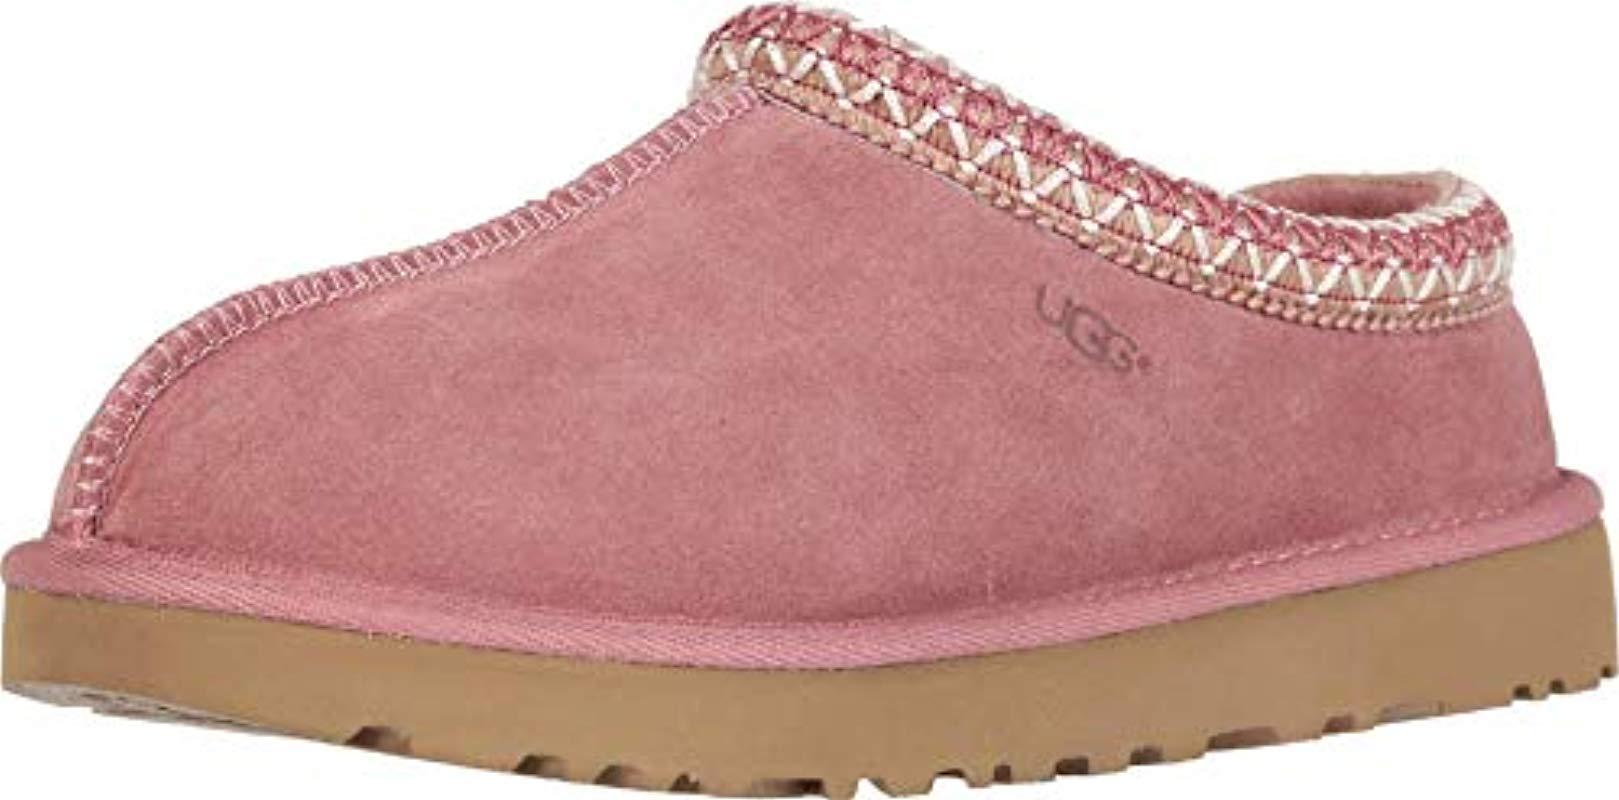 pink ugg slippers tasman journeys